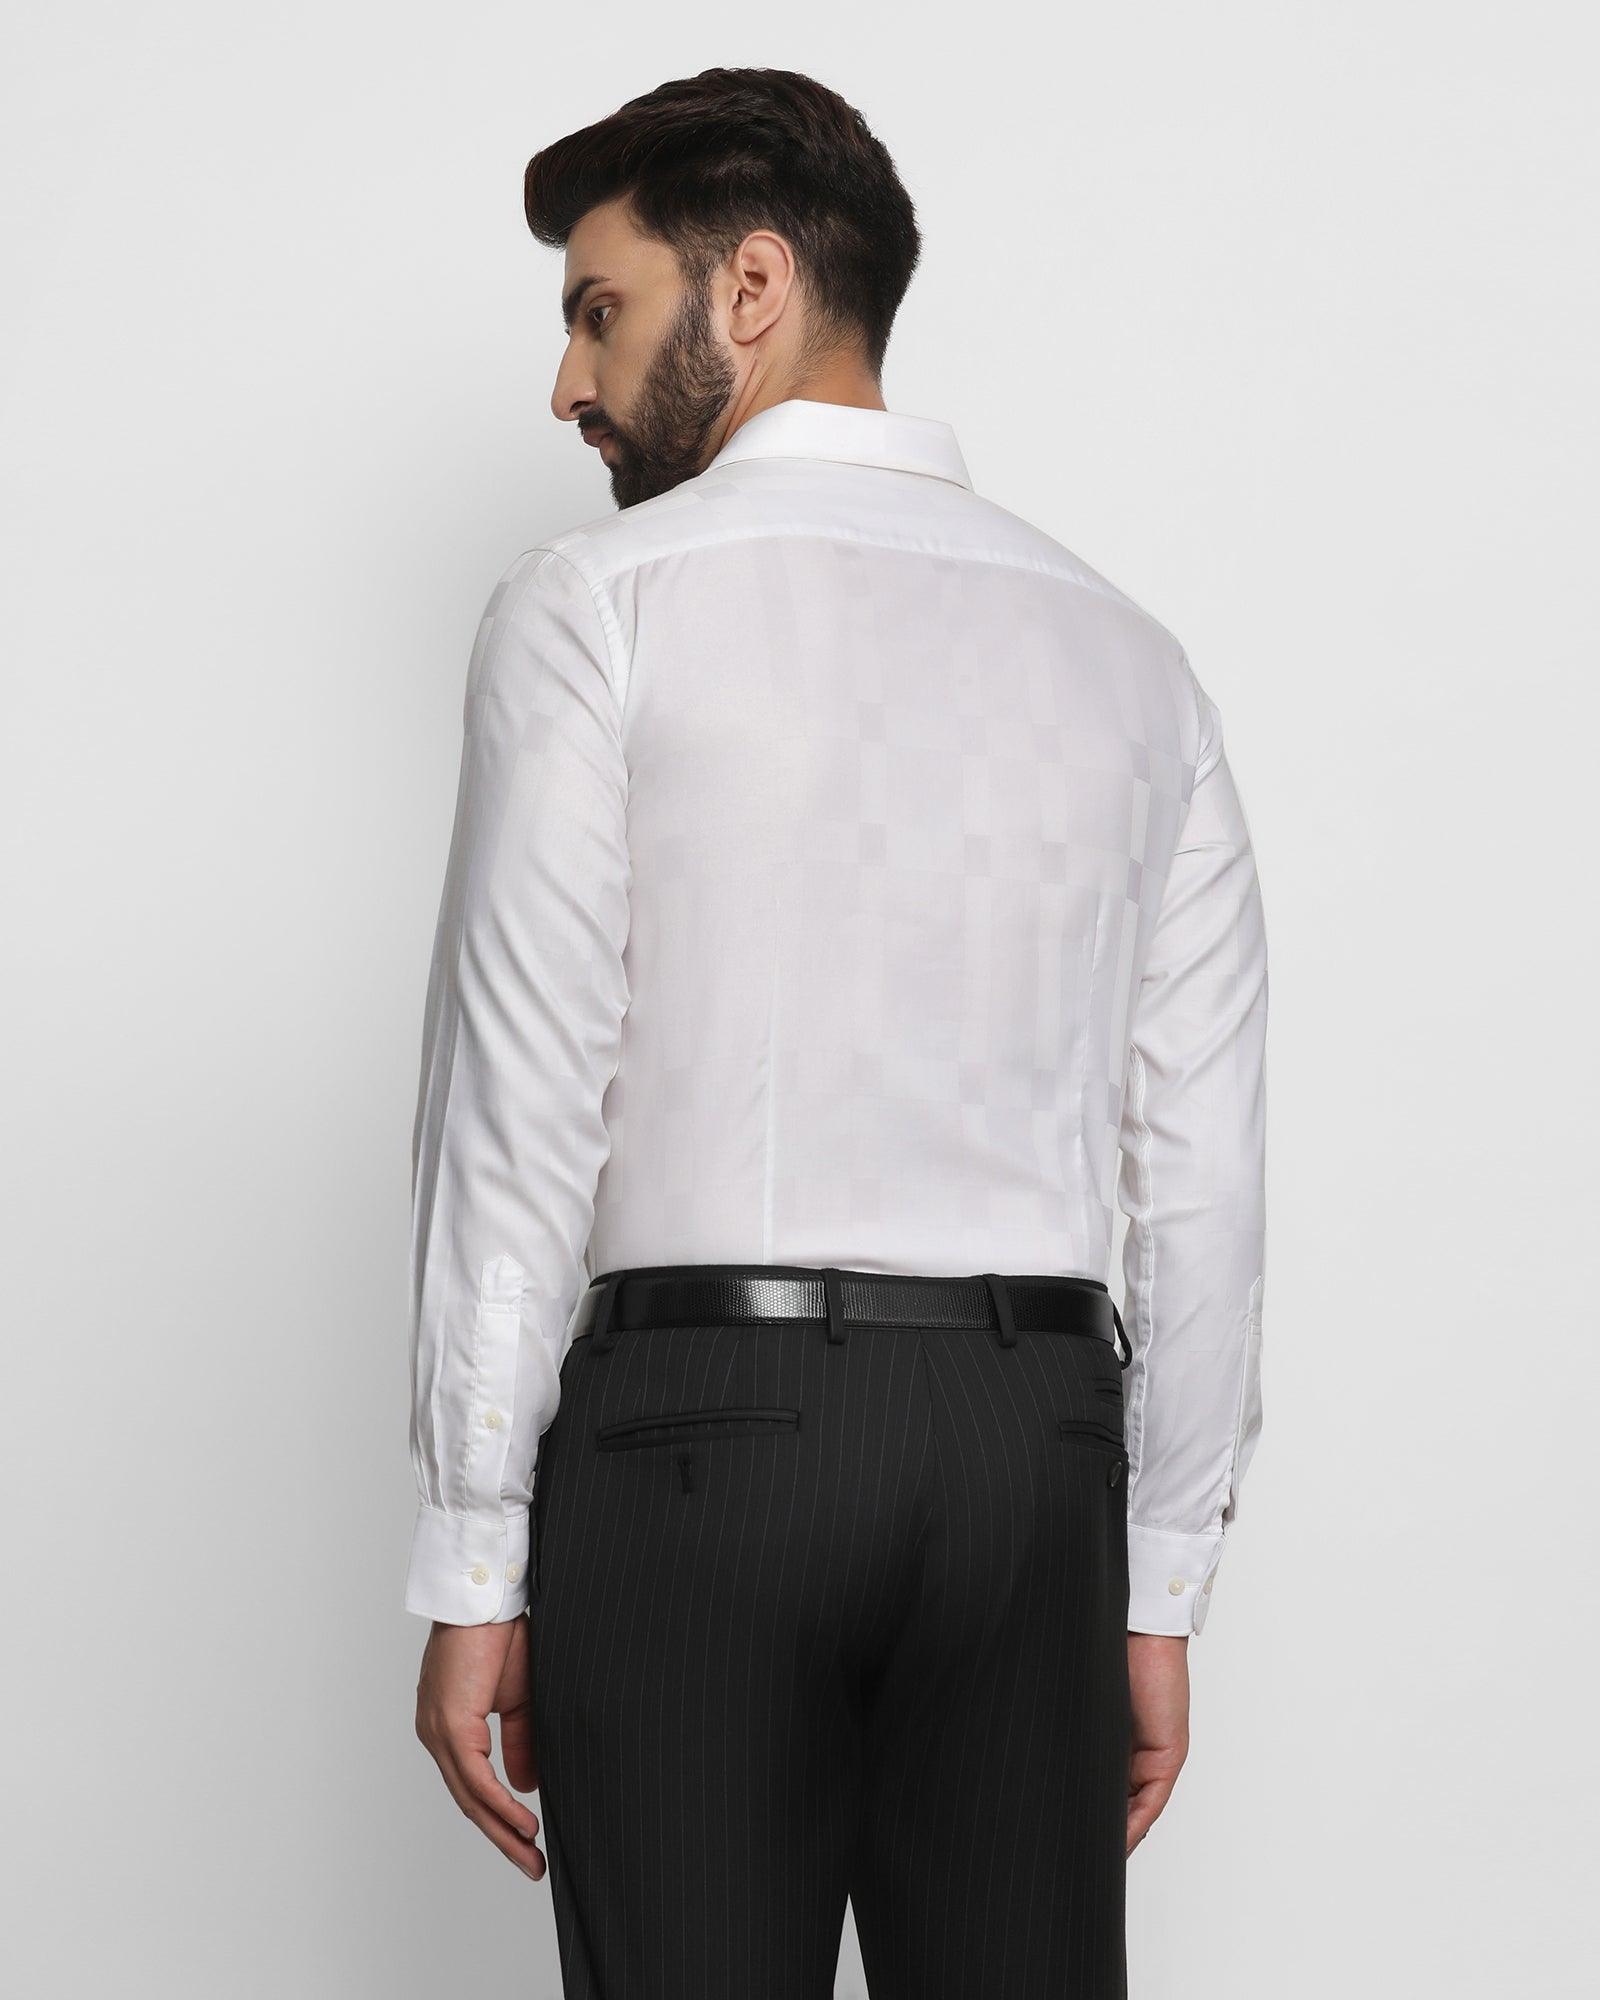 Formal White Check Shirt - Adwin